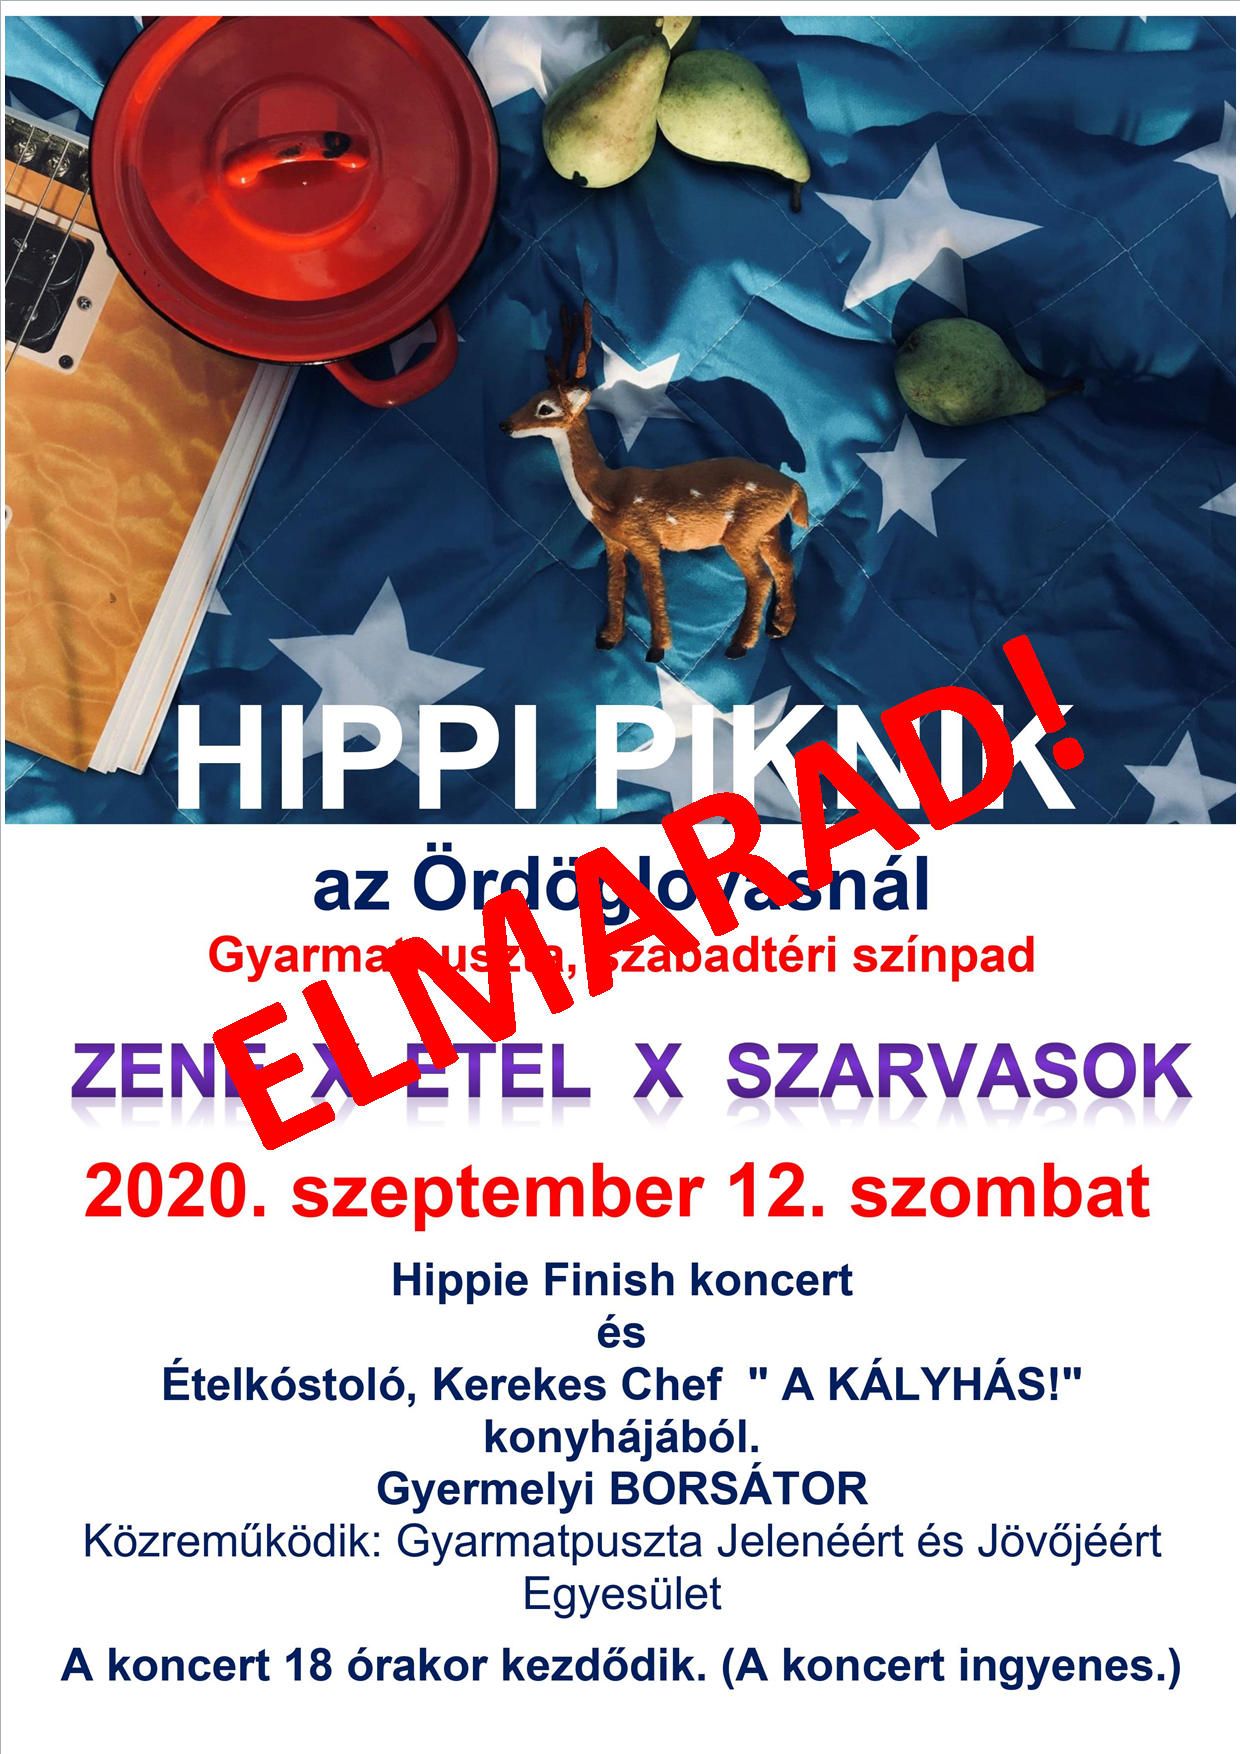 Hippi Piknik 2020